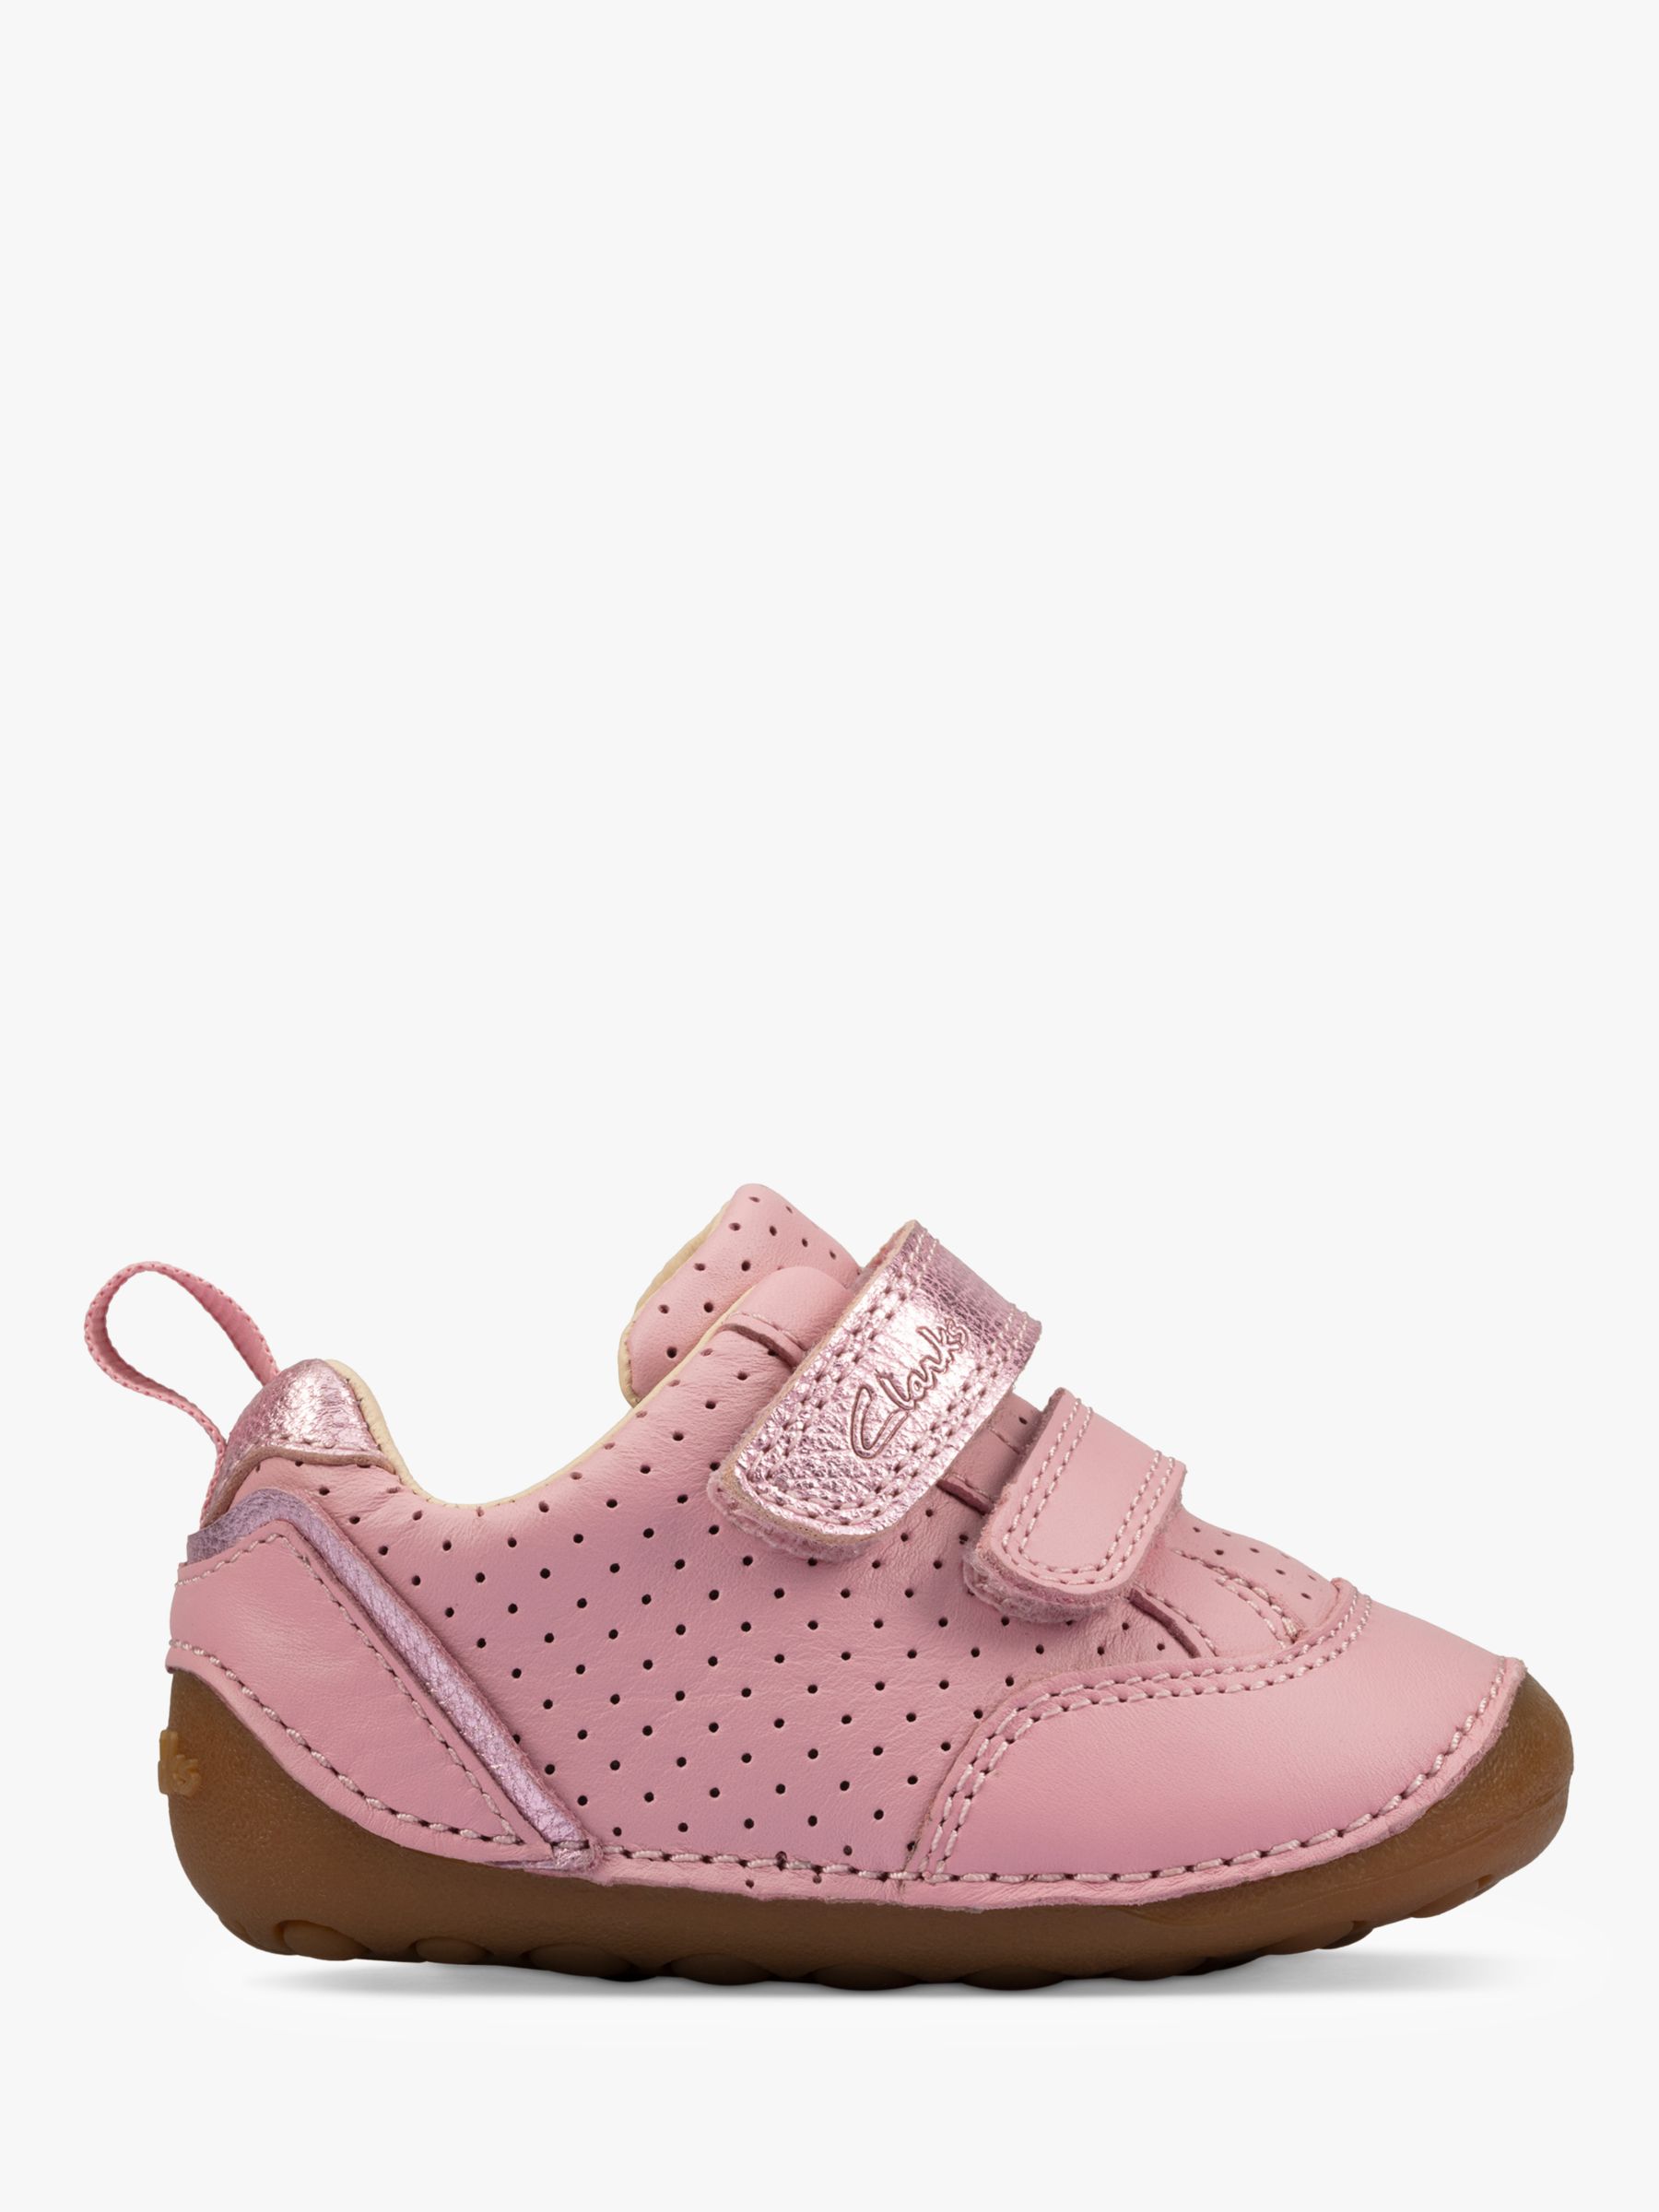 Clarks Kids' Tiny Sky Pre-Walker Leather Shoes, Light Pink Lea